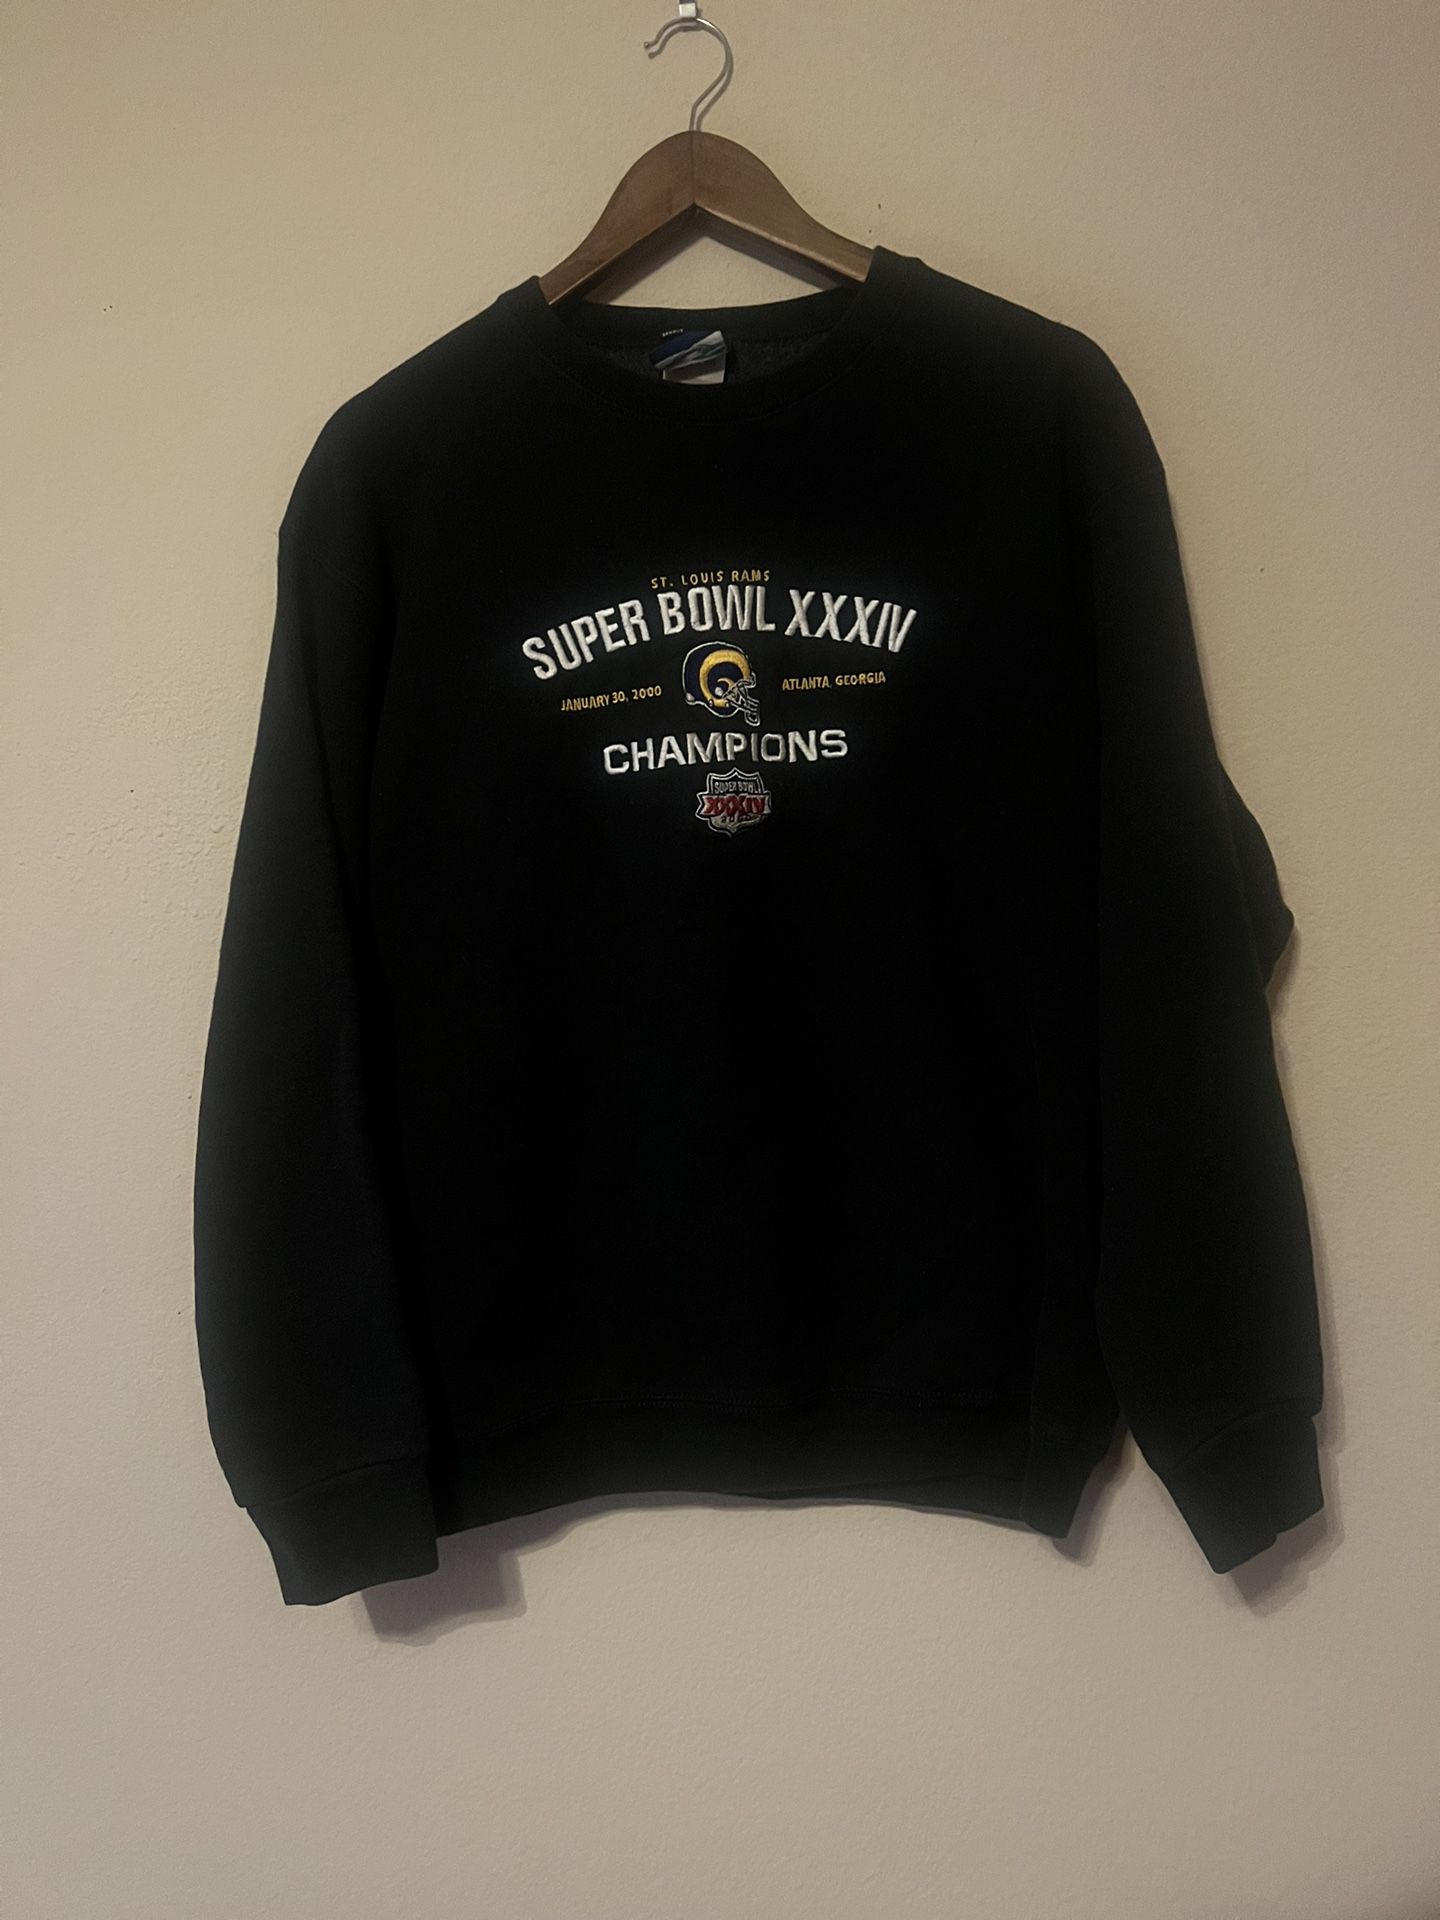 Vintage St. Louis Rams Super Bowl XXXIV Champions Sweatshirt (2000